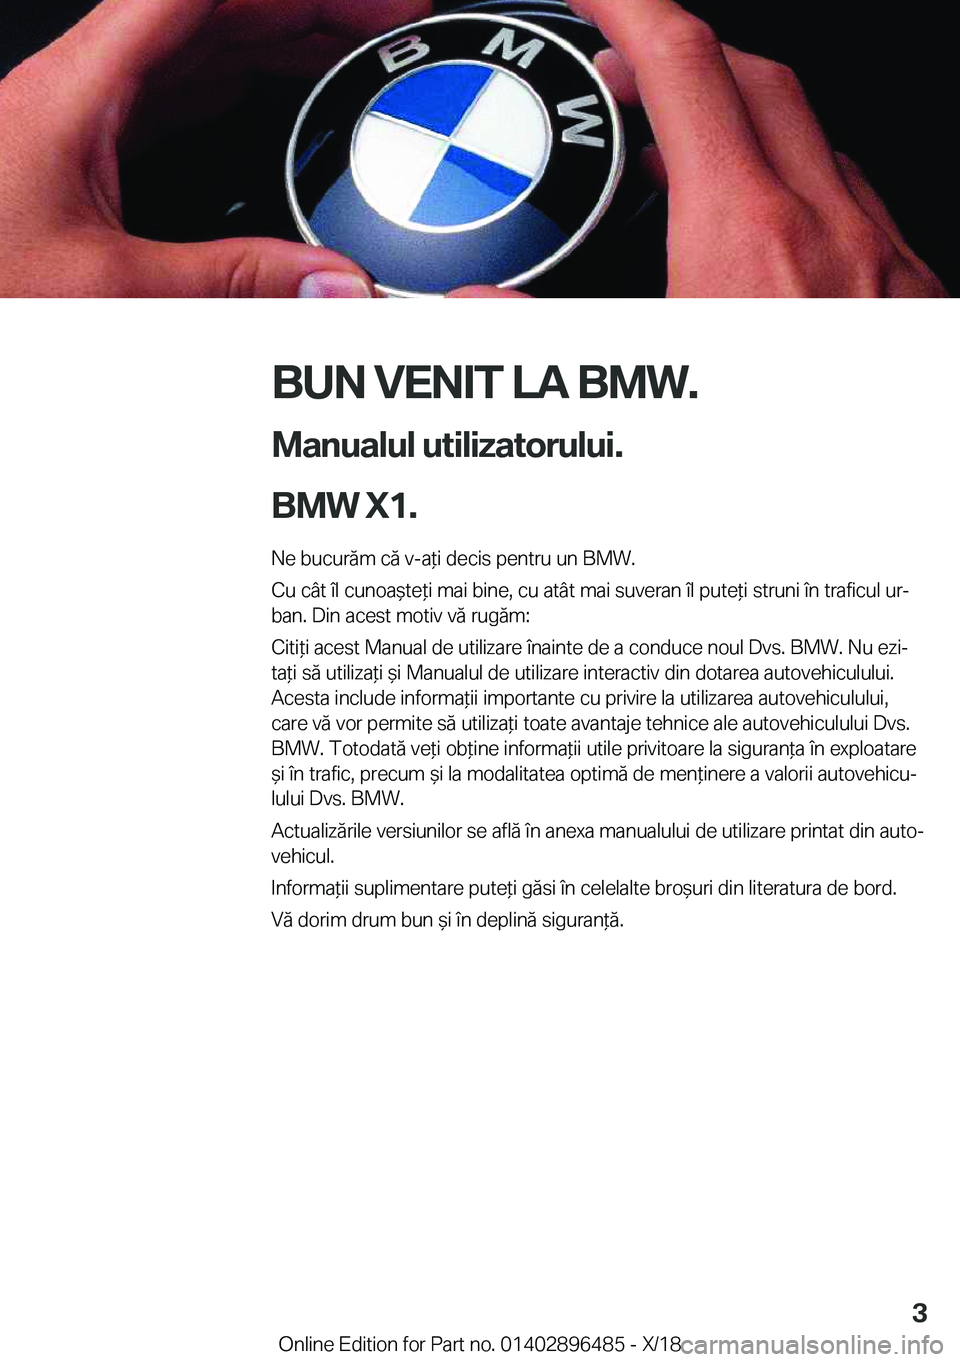 BMW X1 2019  Ghiduri De Utilizare (in Romanian) �B�U�N��V�E�N�I�T��L�A��B�M�W�.�M�a�n�u�a�l�u�l��u�t�i�l�i�z�a�t�o�r�u�l�u�i�.
�B�M�W��X�1�. �N�e��b�u�c�u�r�